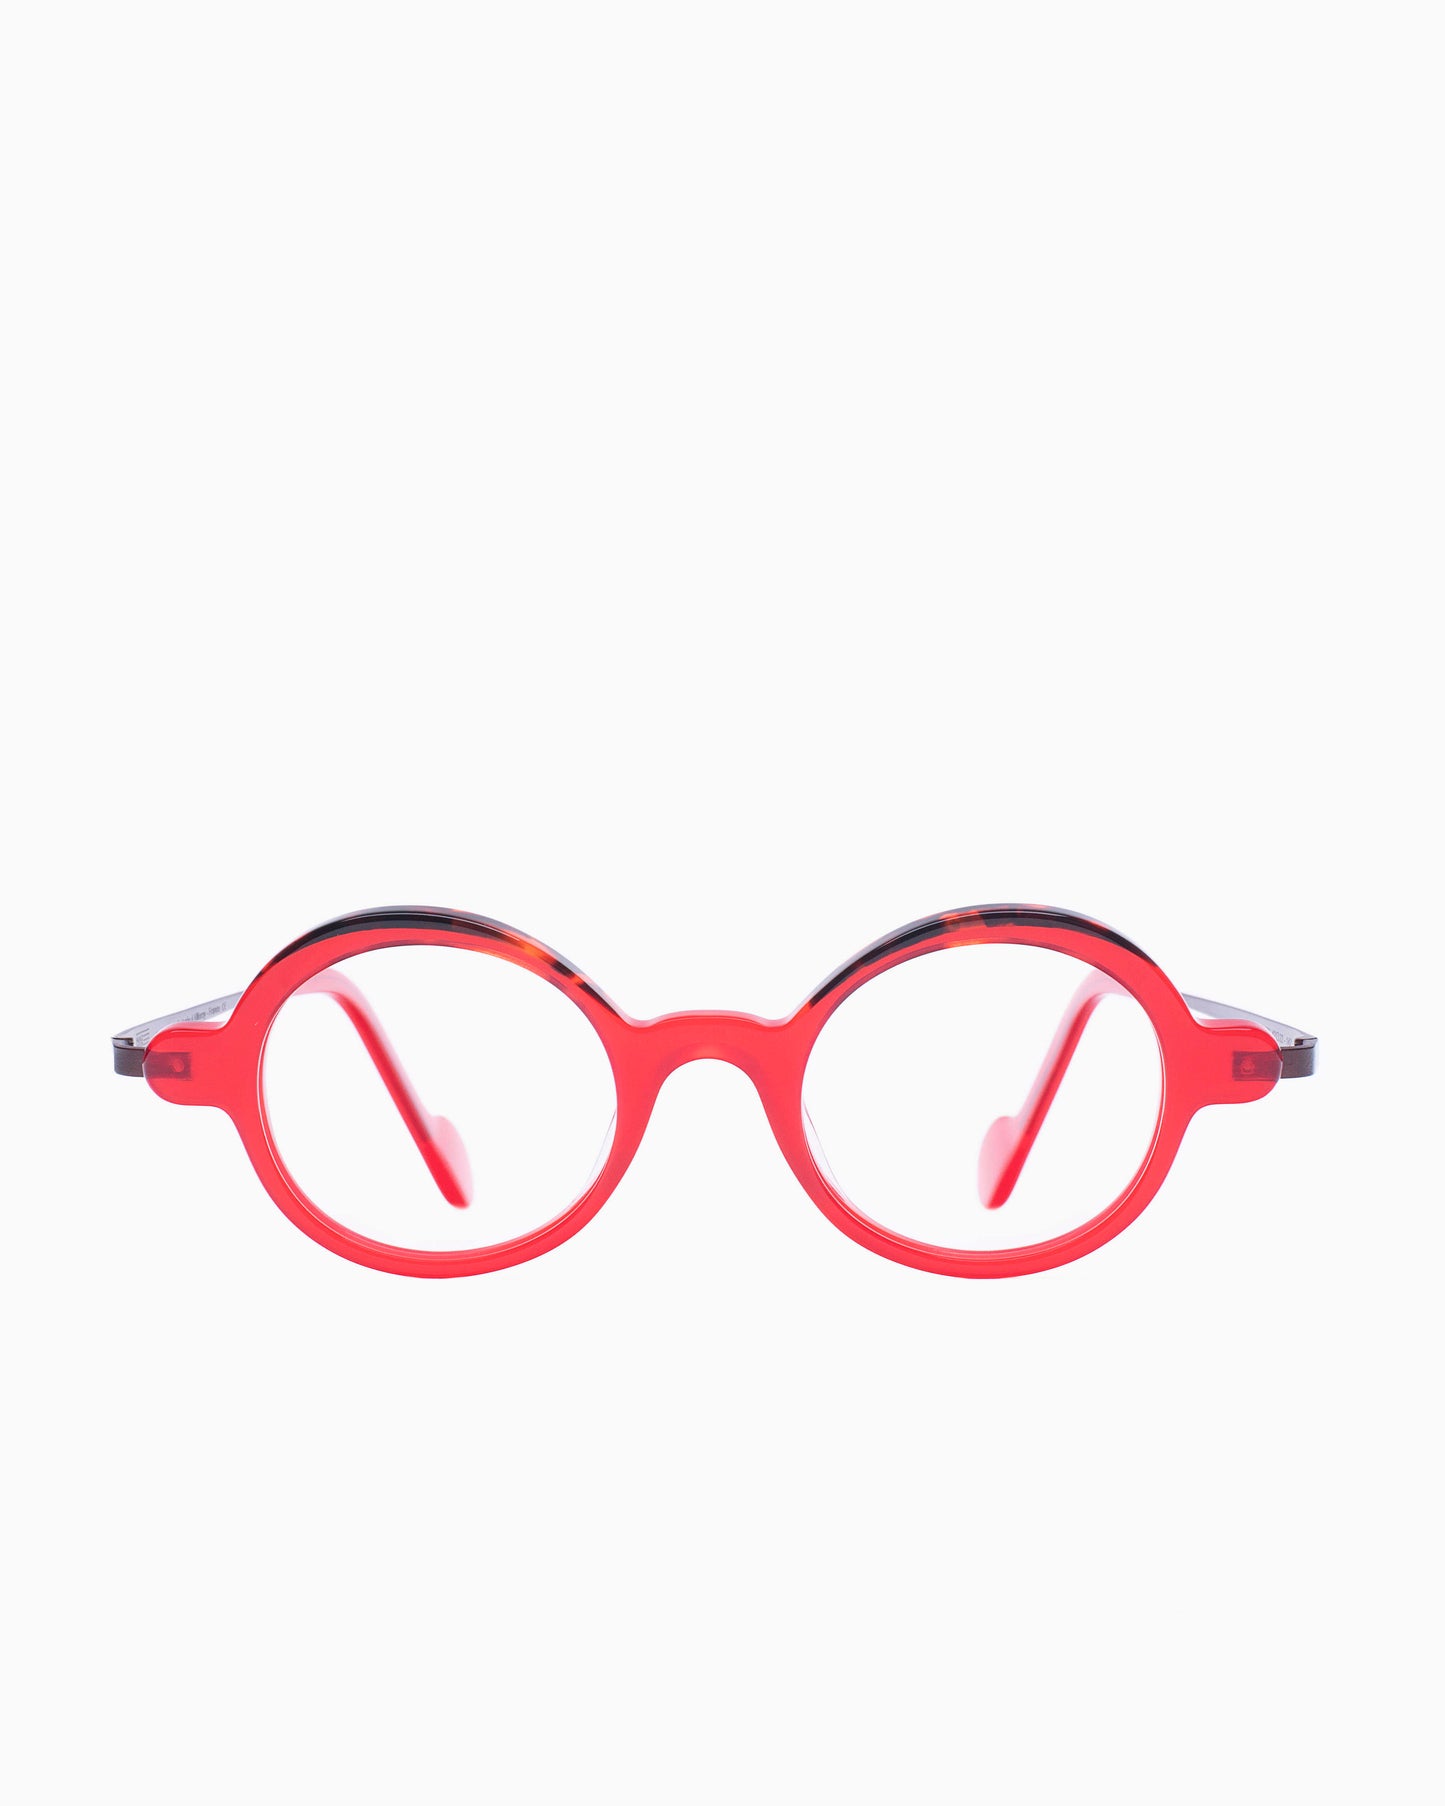 Nao Ned - ODED - 20029 | glasses bar